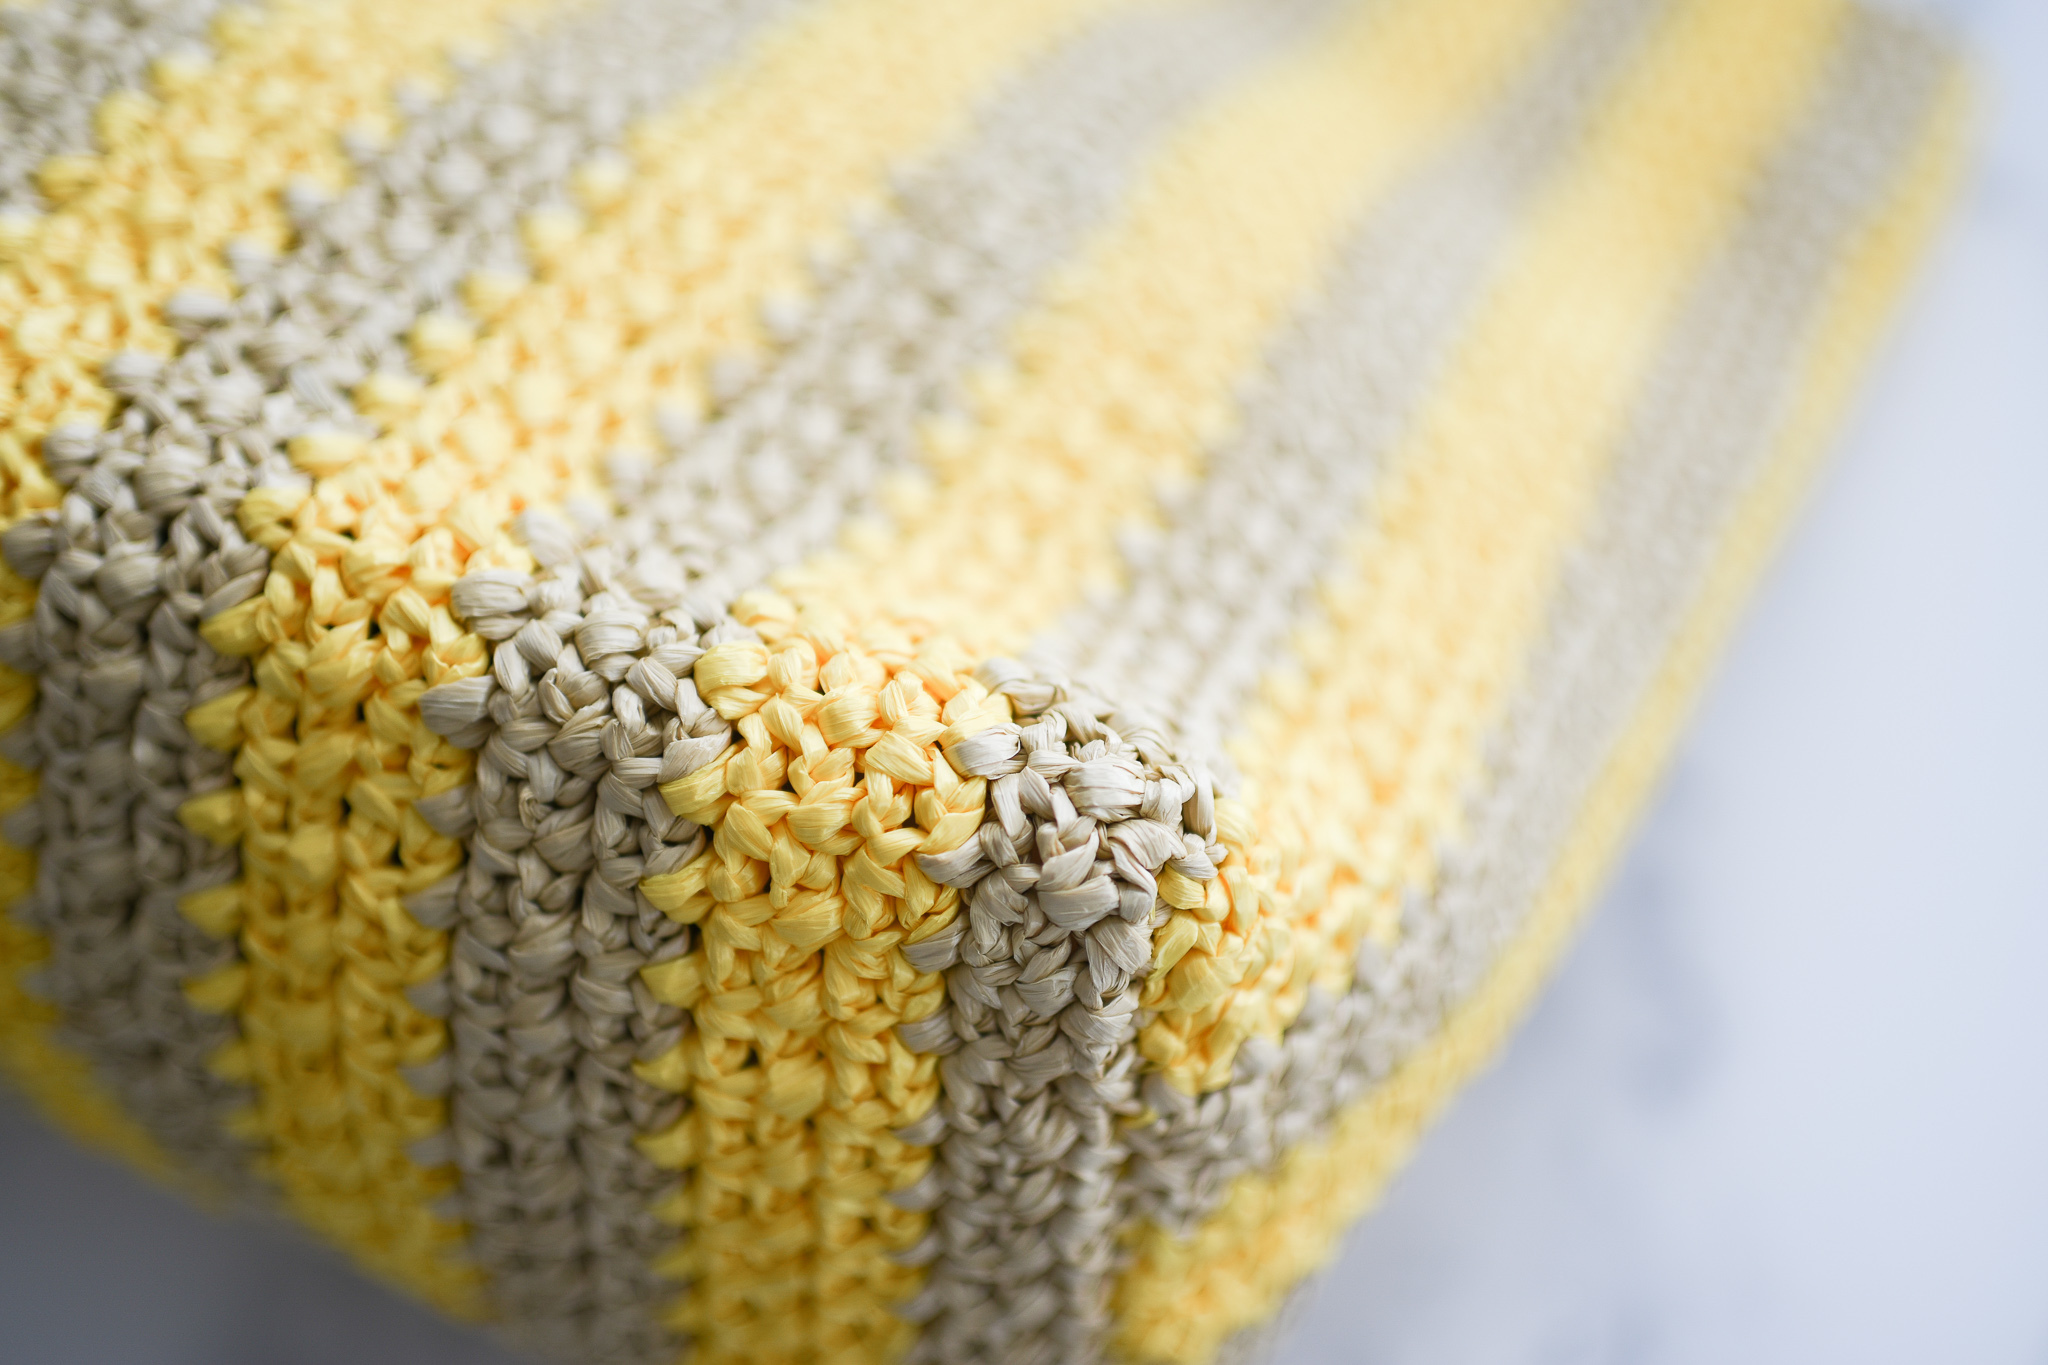 Prada raffia tote bag Cedar logo crochet yellow 37×36×3cm with